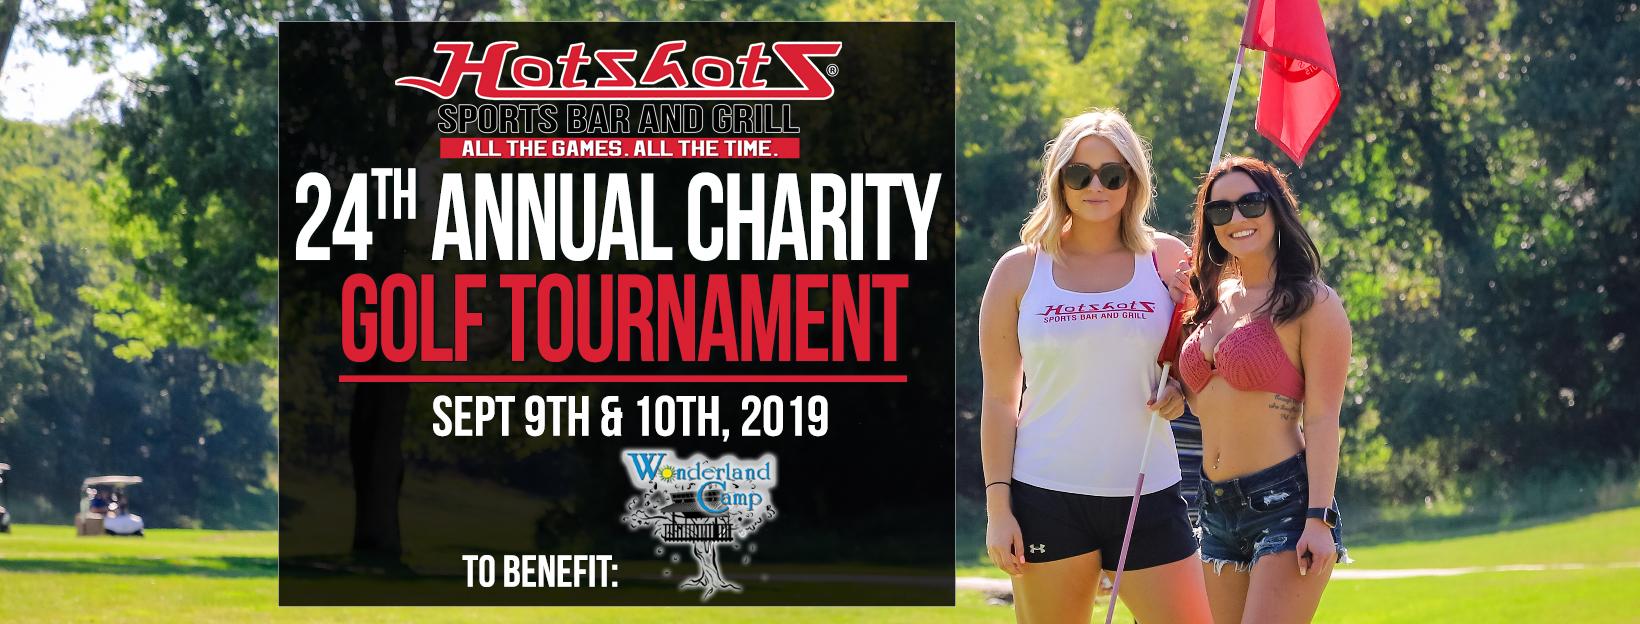 2019 Hotshots Sports Bar & Grill Charity Golf Tournament - TUESDAY